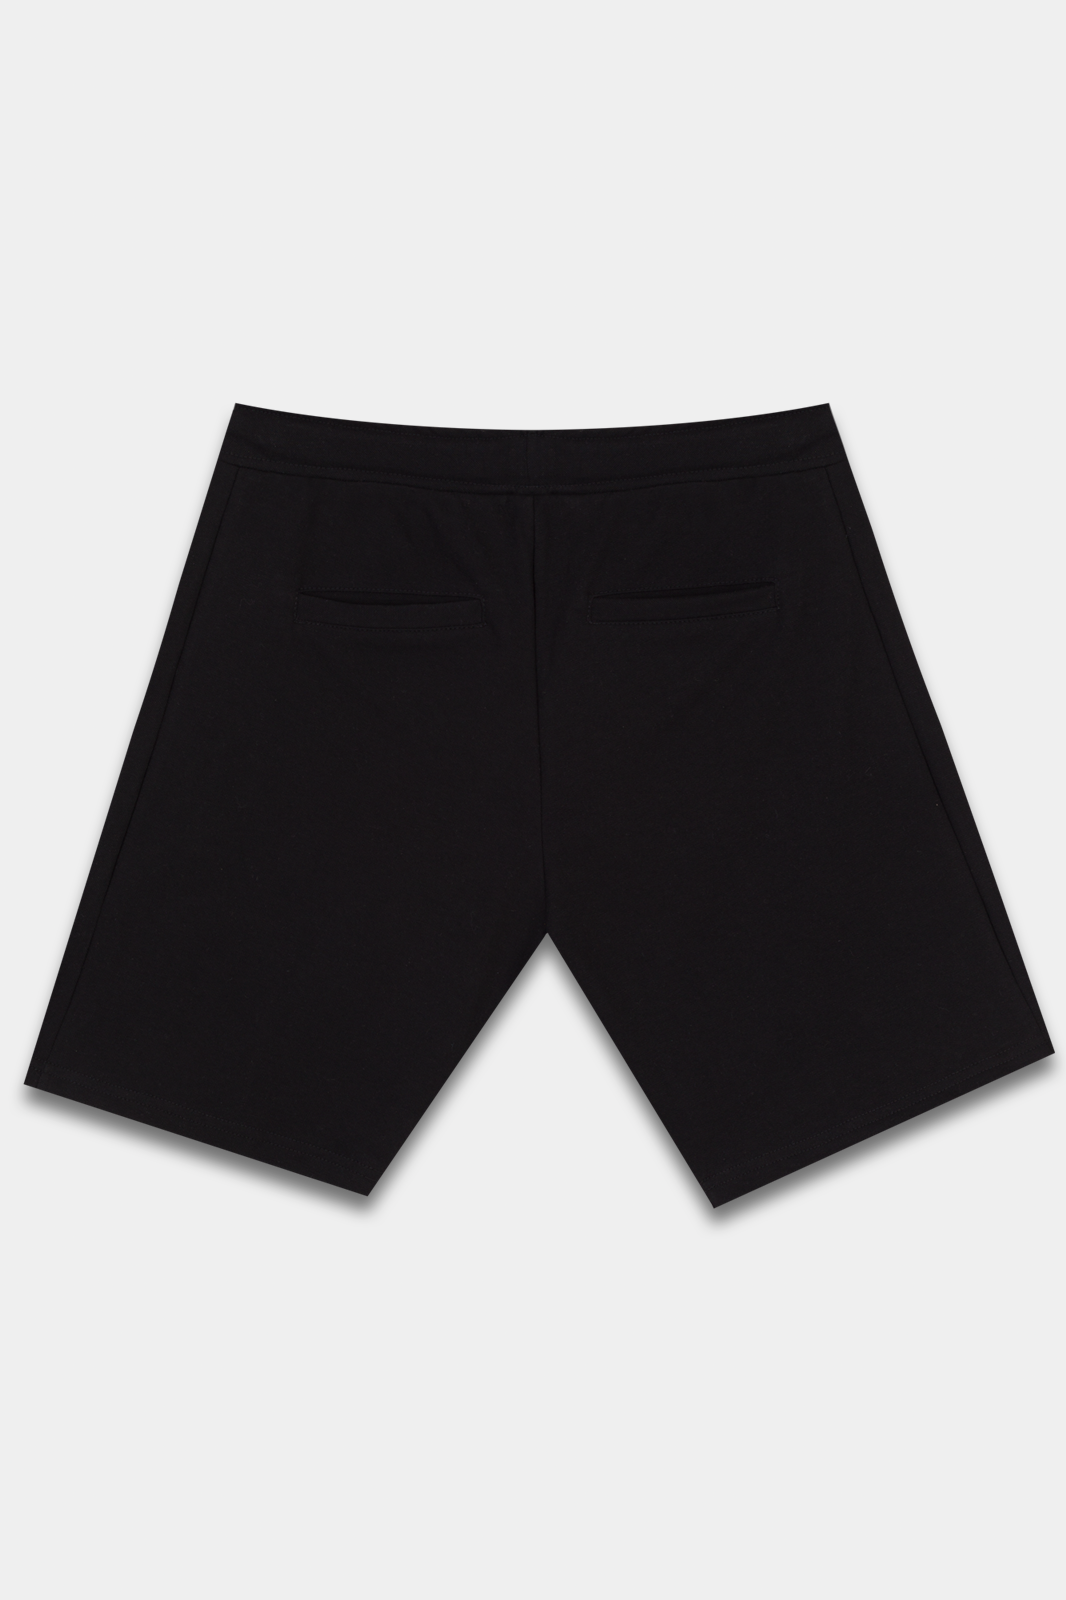 Black Shorts for Men